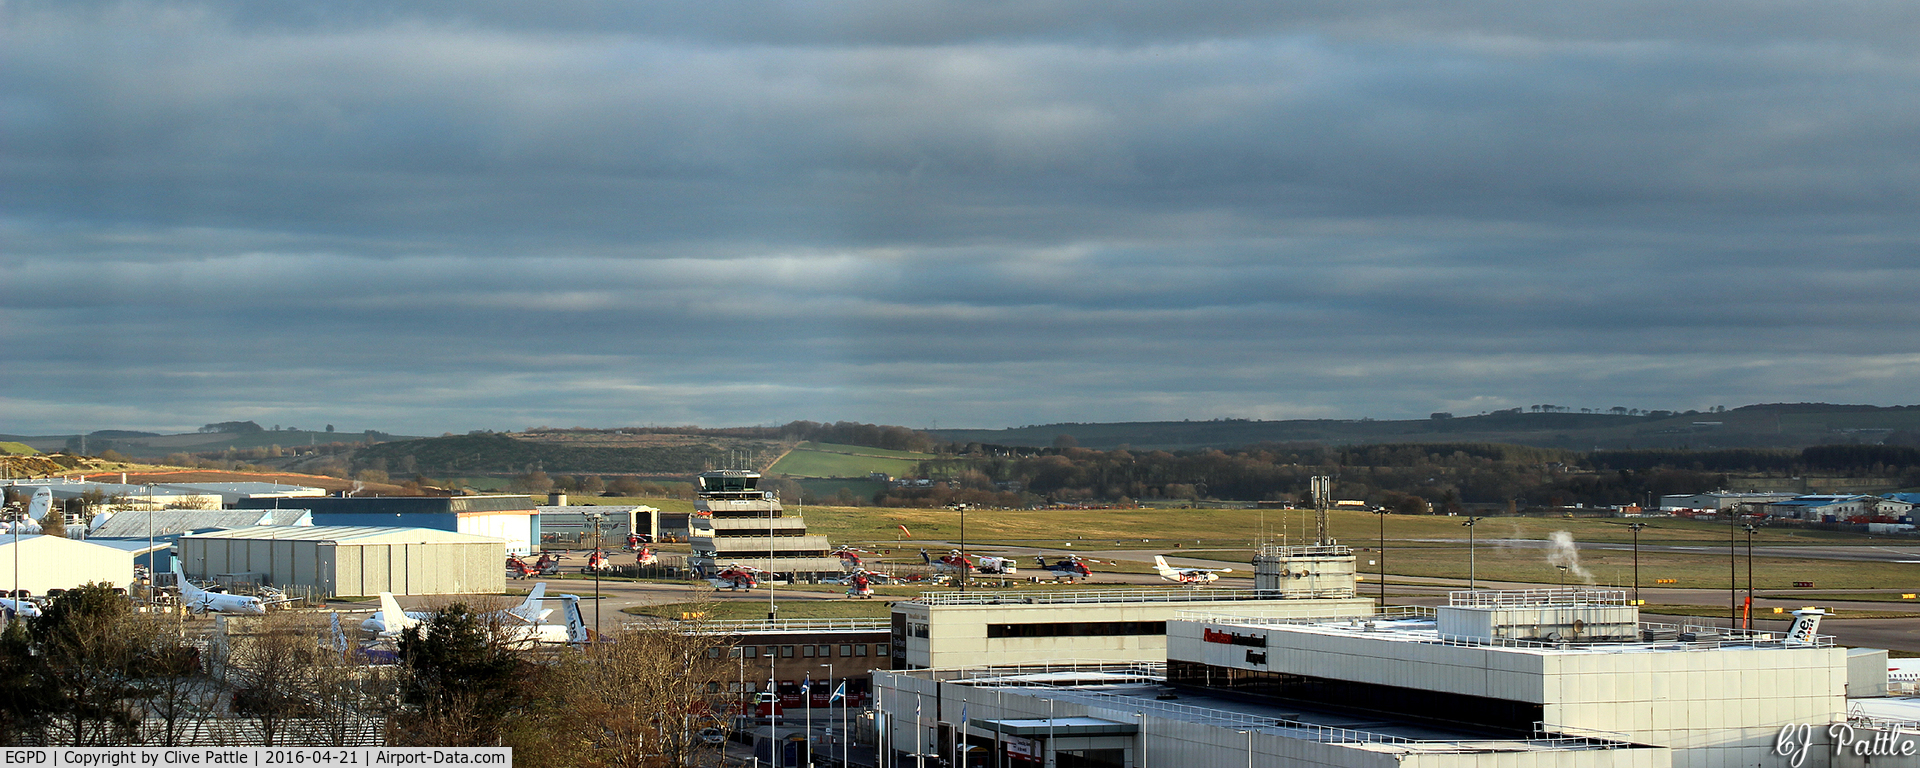 Aberdeen Airport, Aberdeen, Scotland United Kingdom (EGPD) - Aberdeen EGPD looking north - panoramic